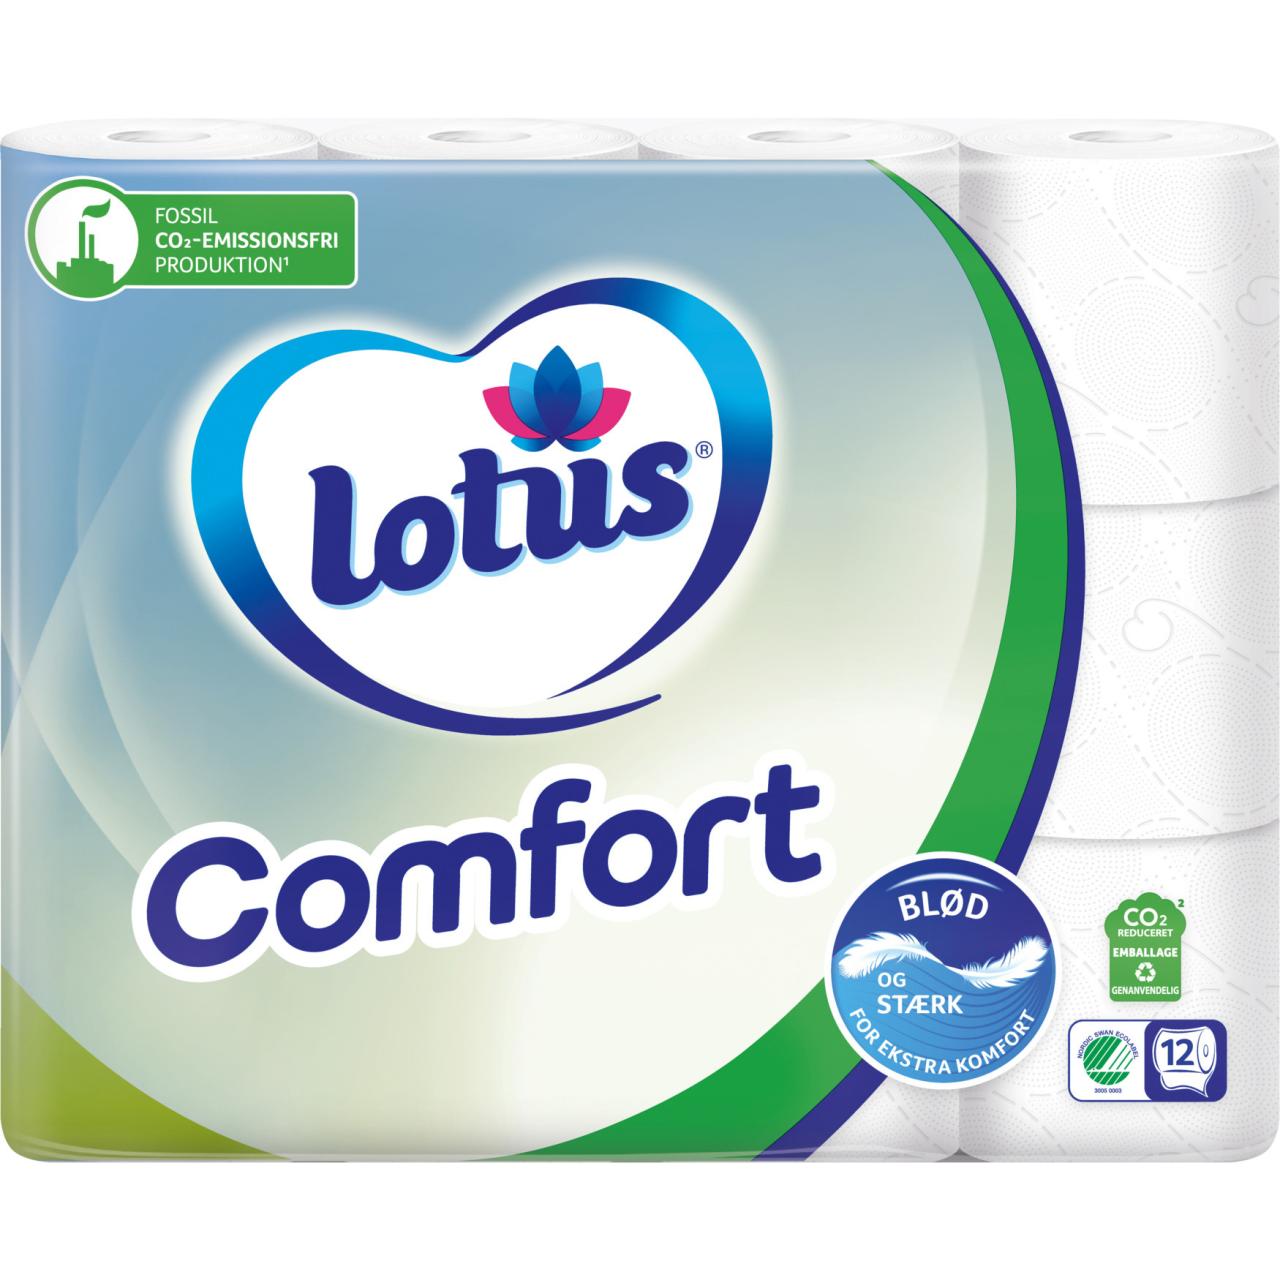 Lotus Comfort Toilettenpapier 3lagig 12 Ro.